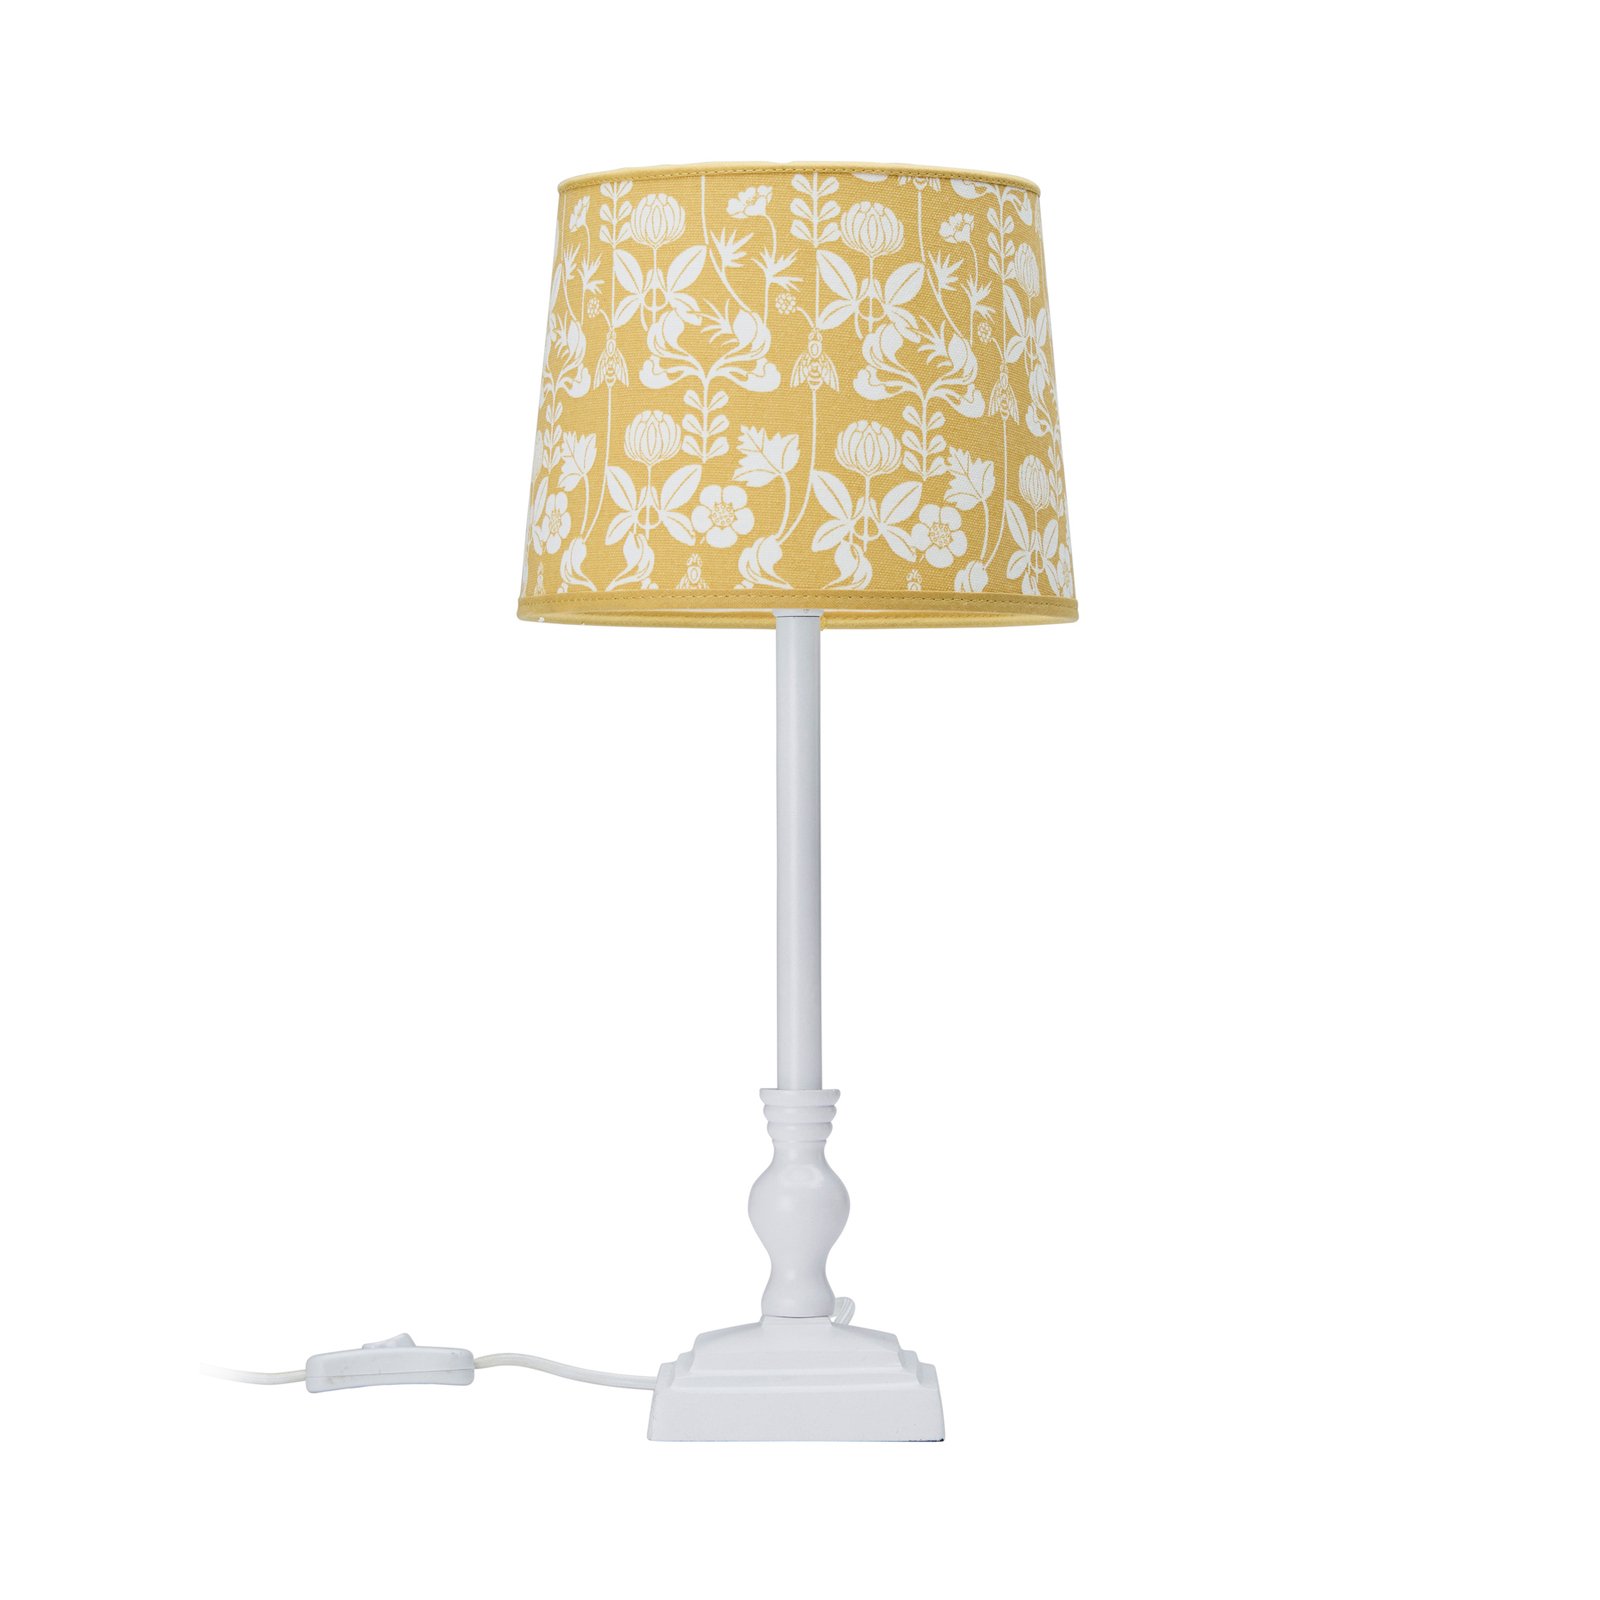 PR Home Lisa tafellamp mat wit/geel gebloemd